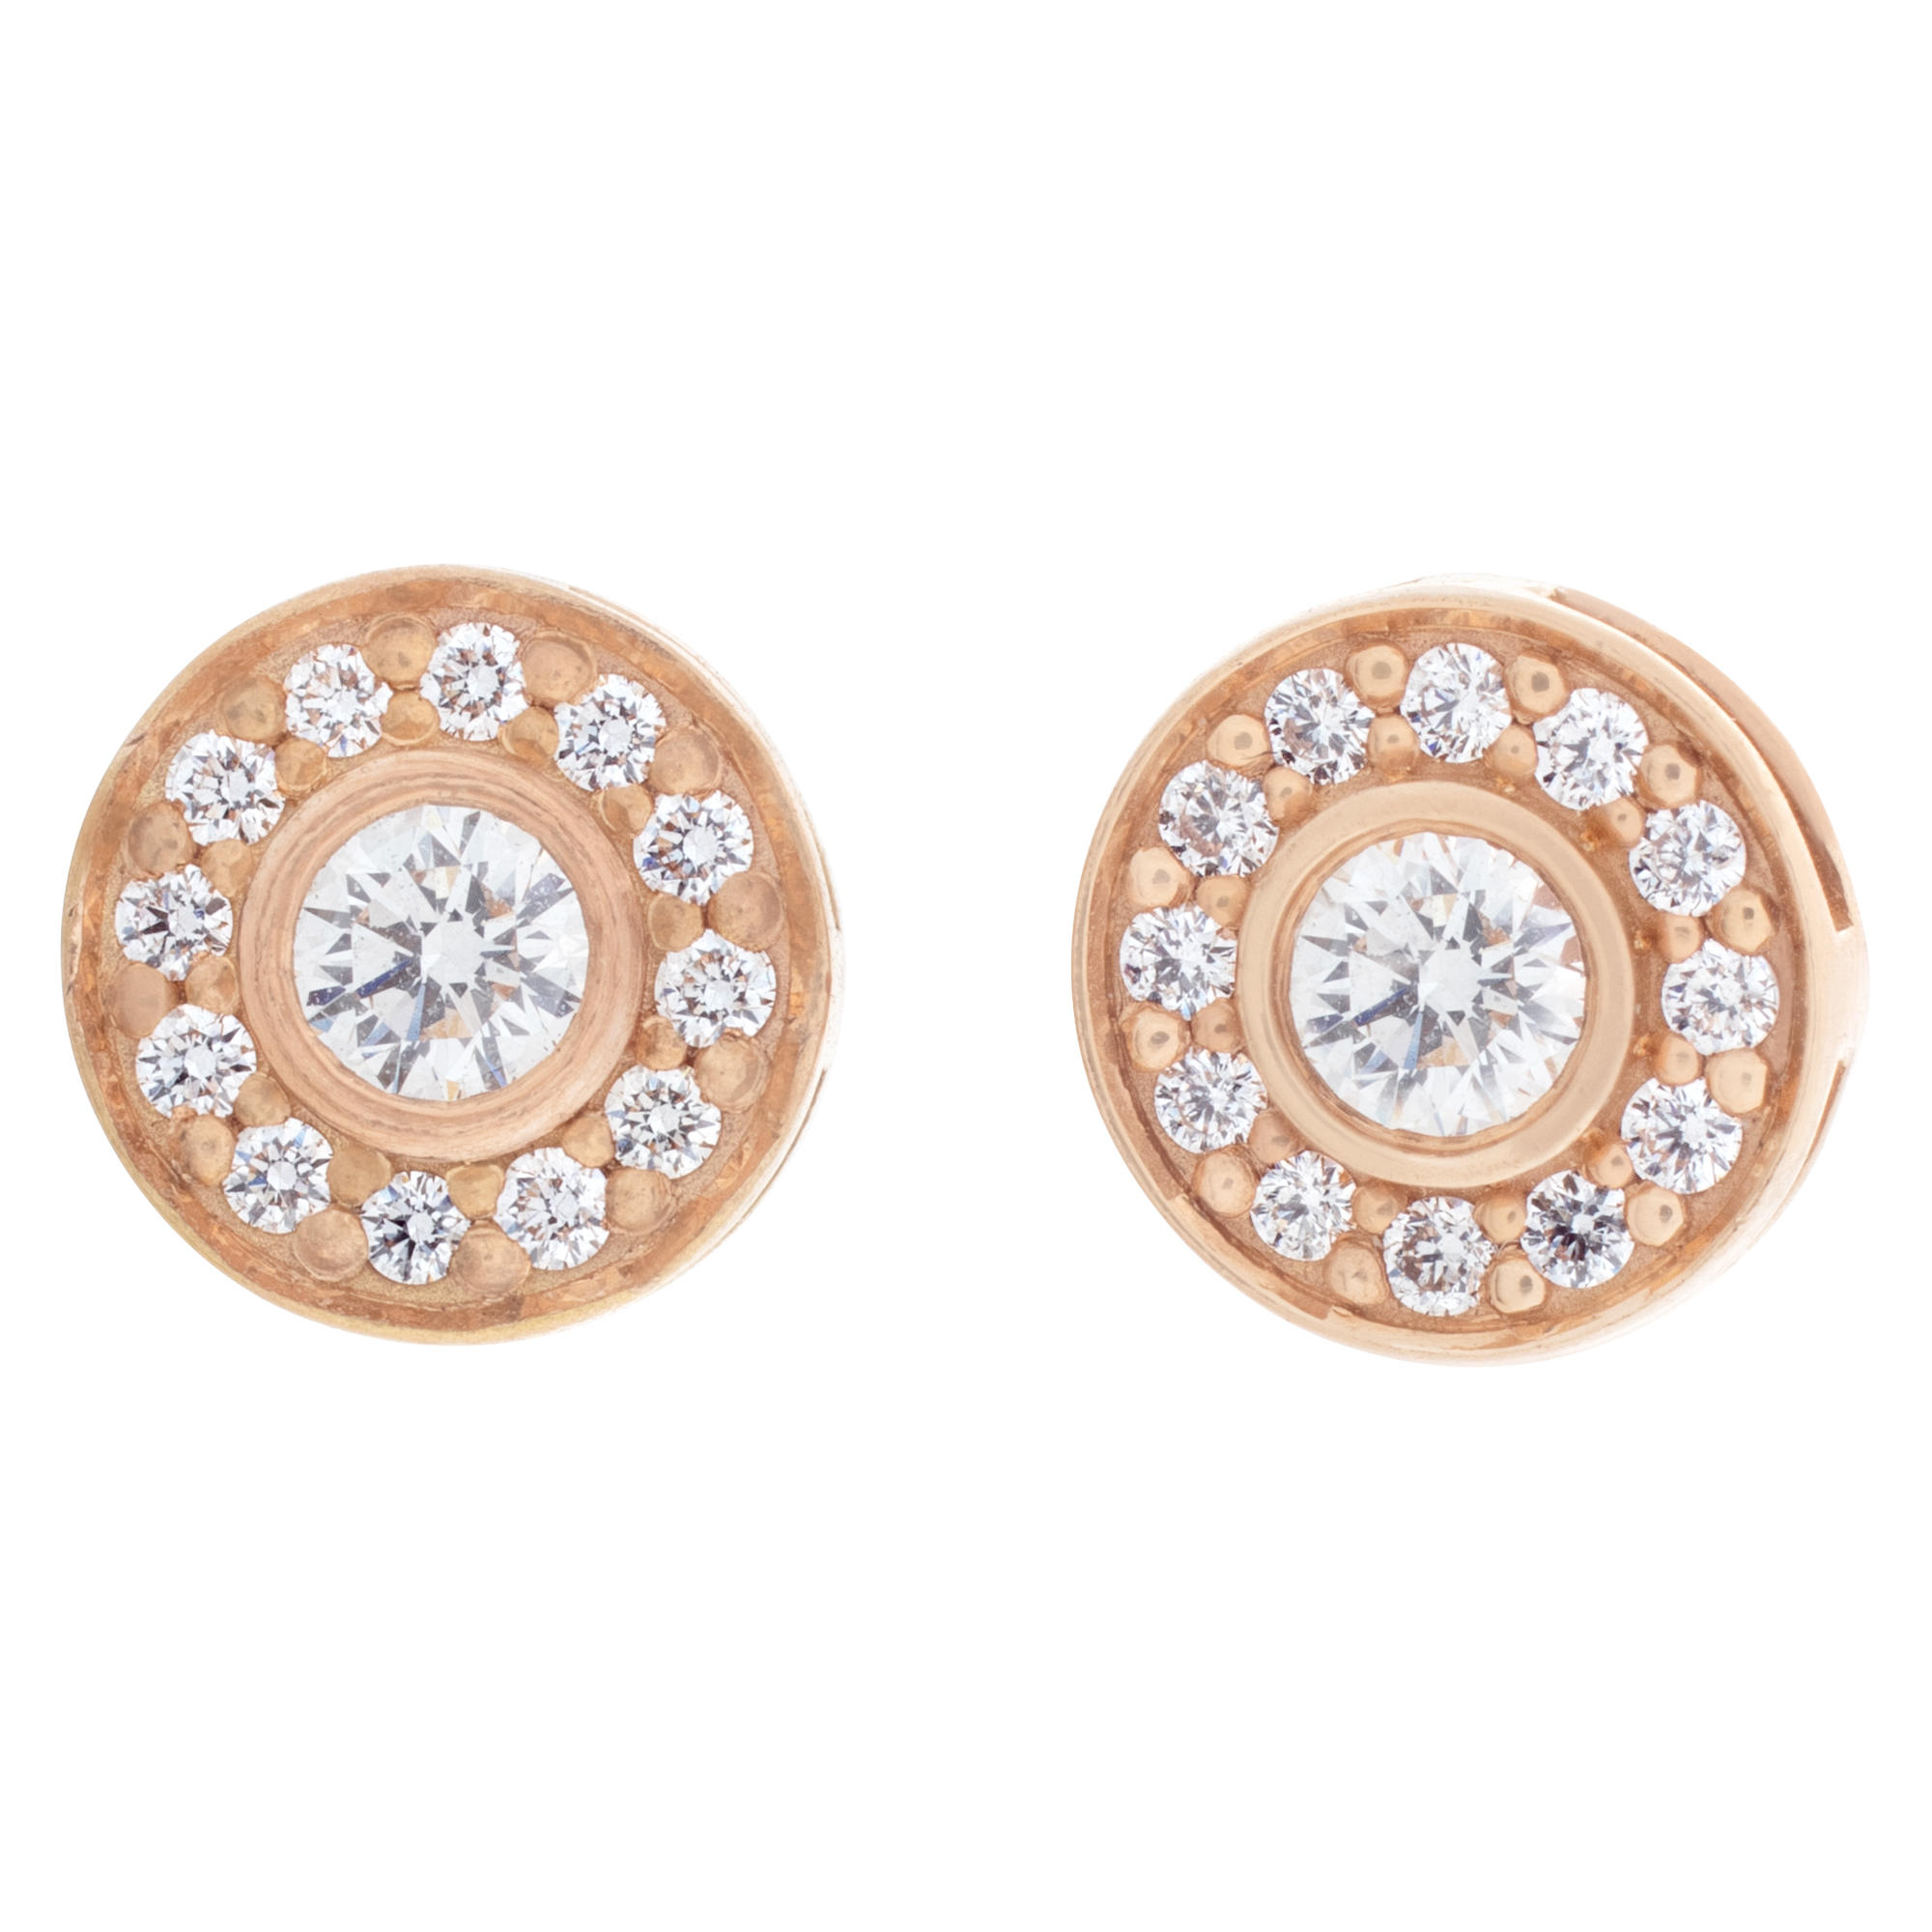 Tffany & Co. Mini Circlet earrings in 18k rose gold